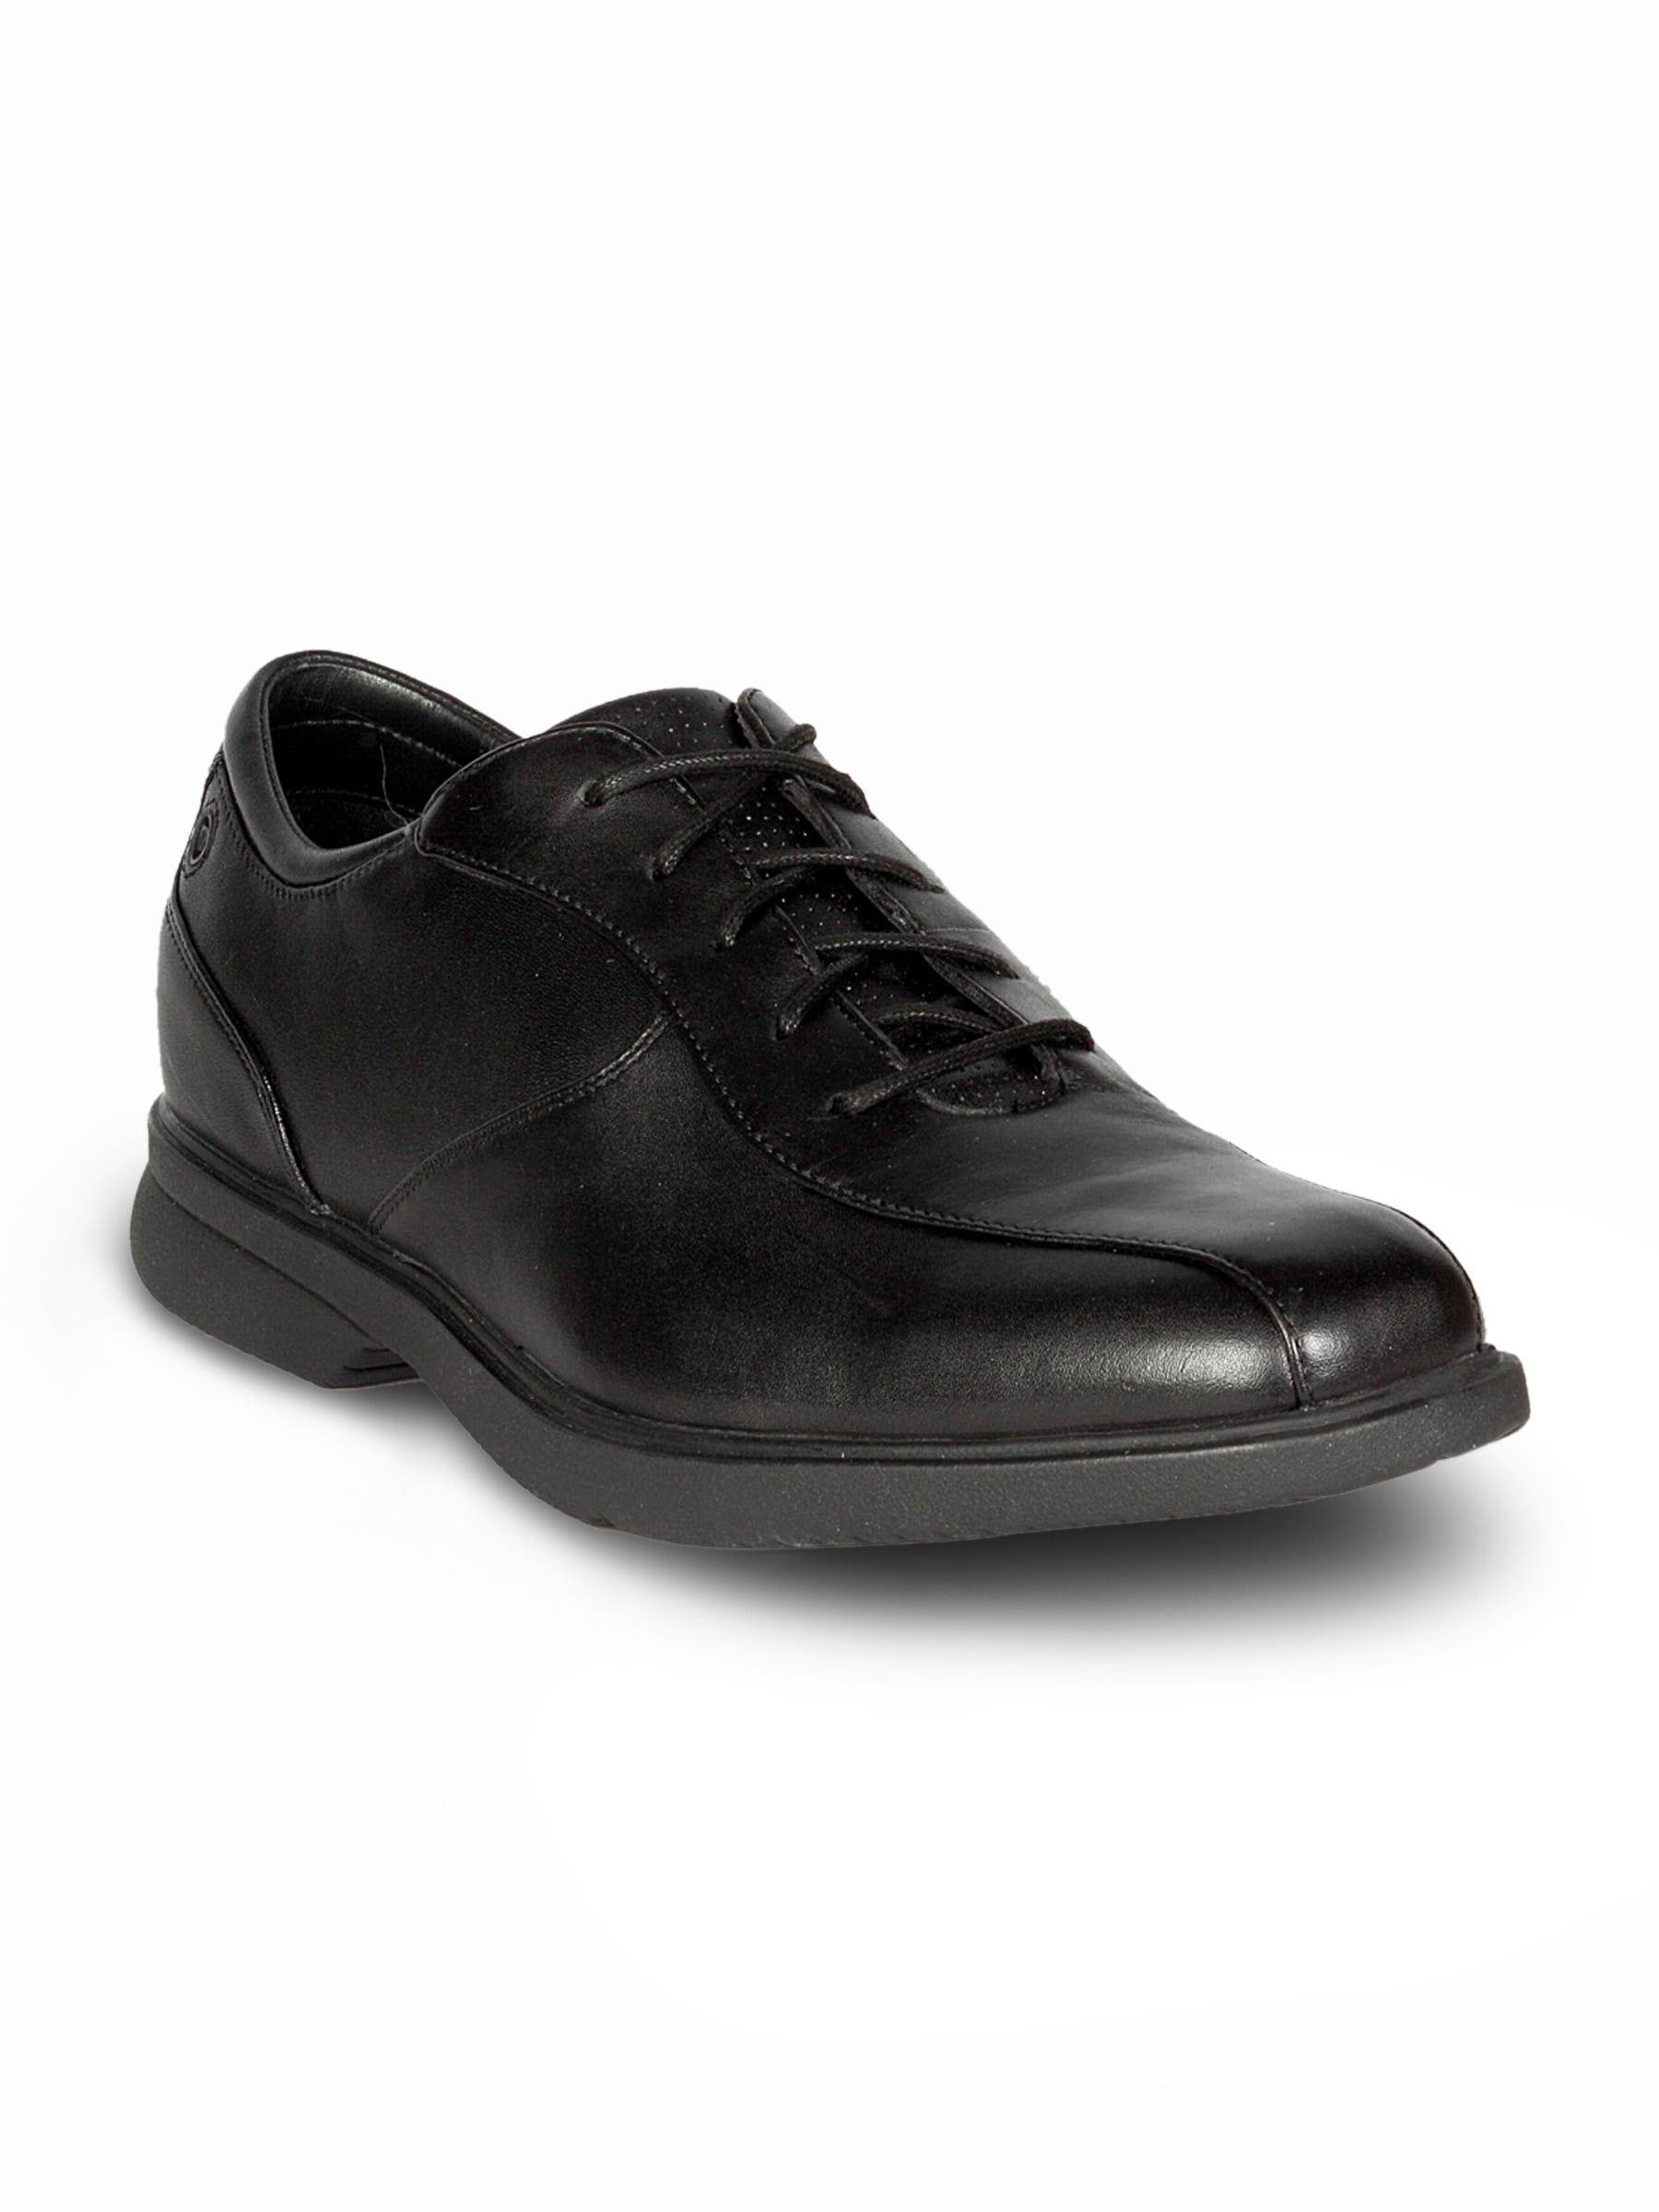 Rockport Men's Alduna Black Shoe